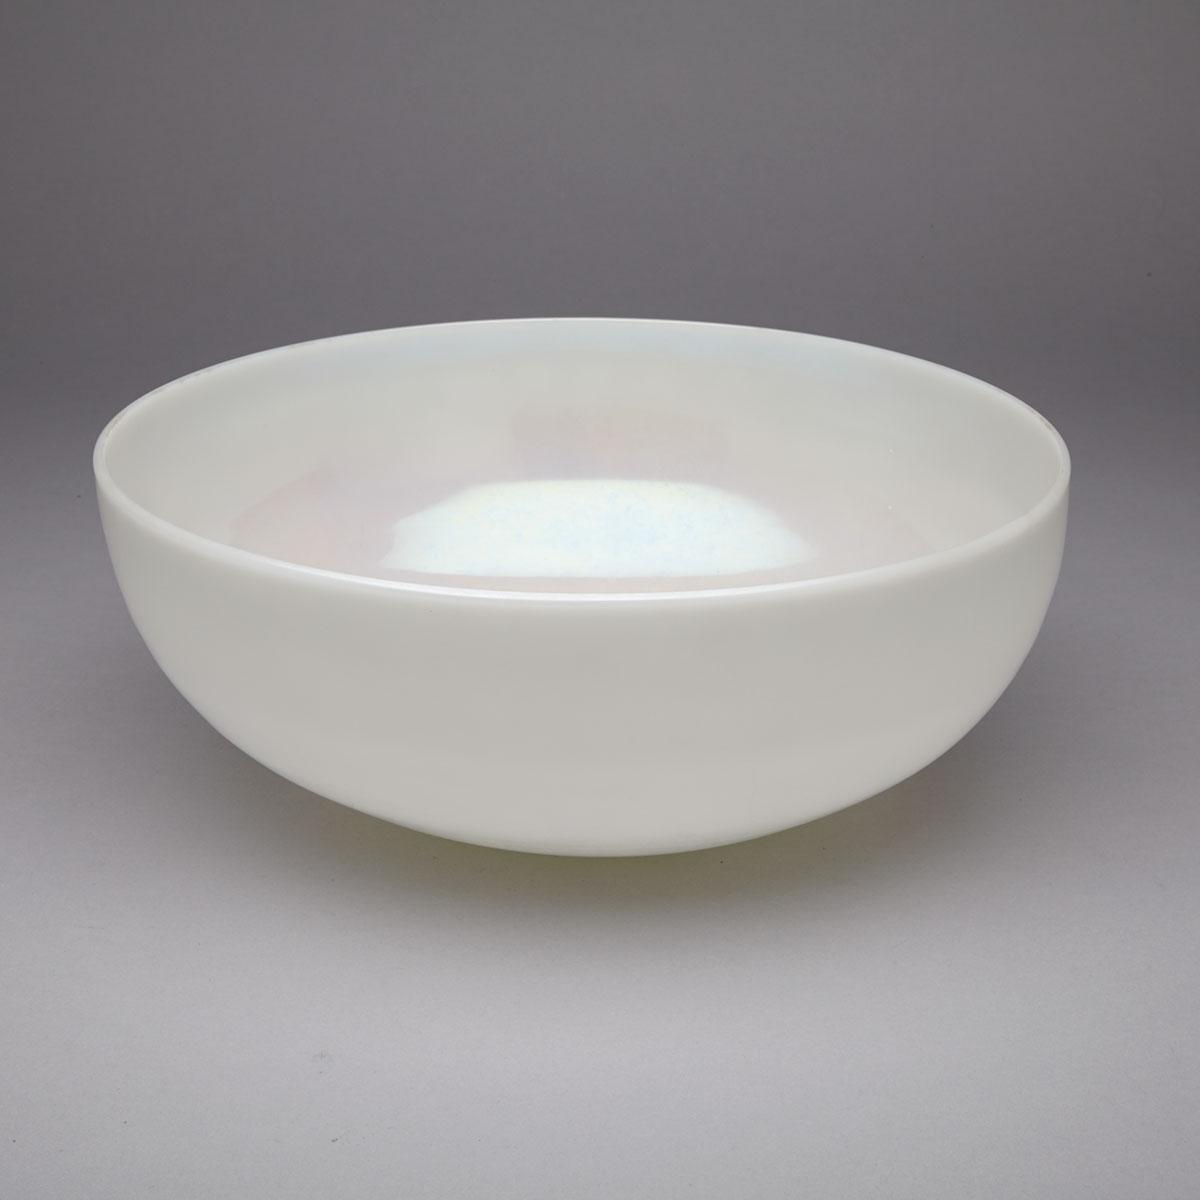 Steuben ‘Calcite’ Iridescent Opaque White Glass Bowl, c.1920